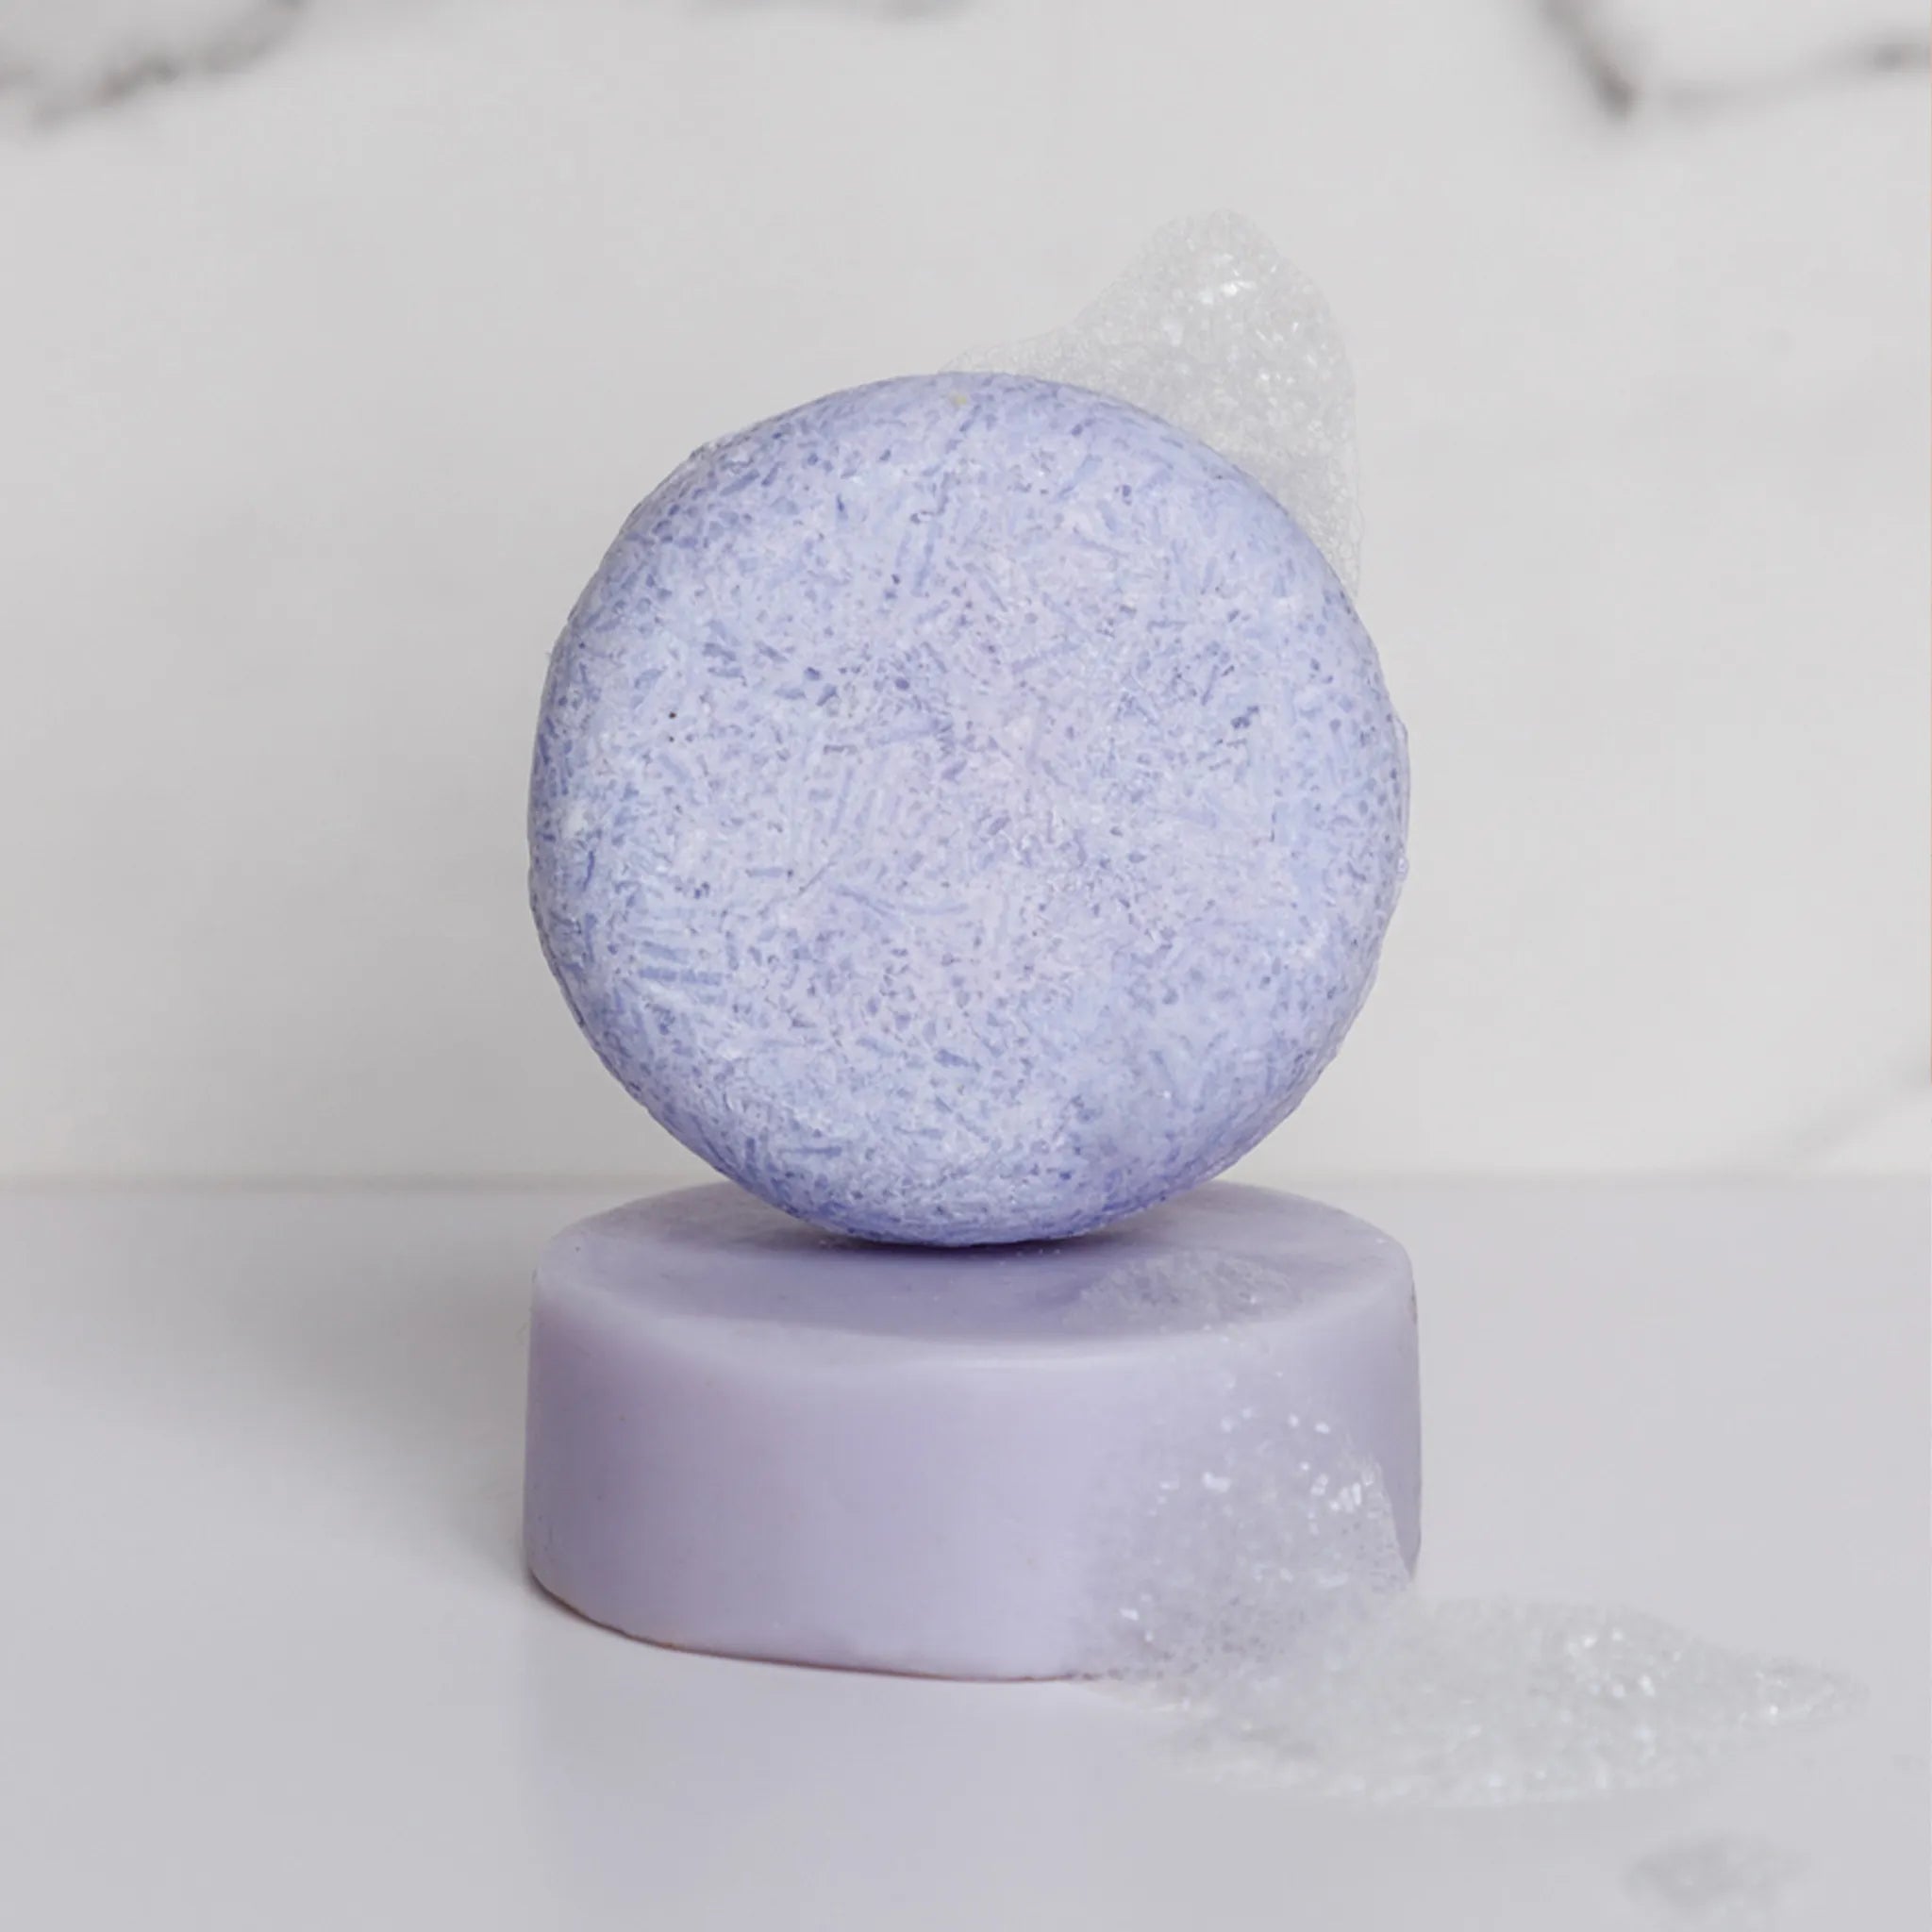 lavender shampoo and conditioner